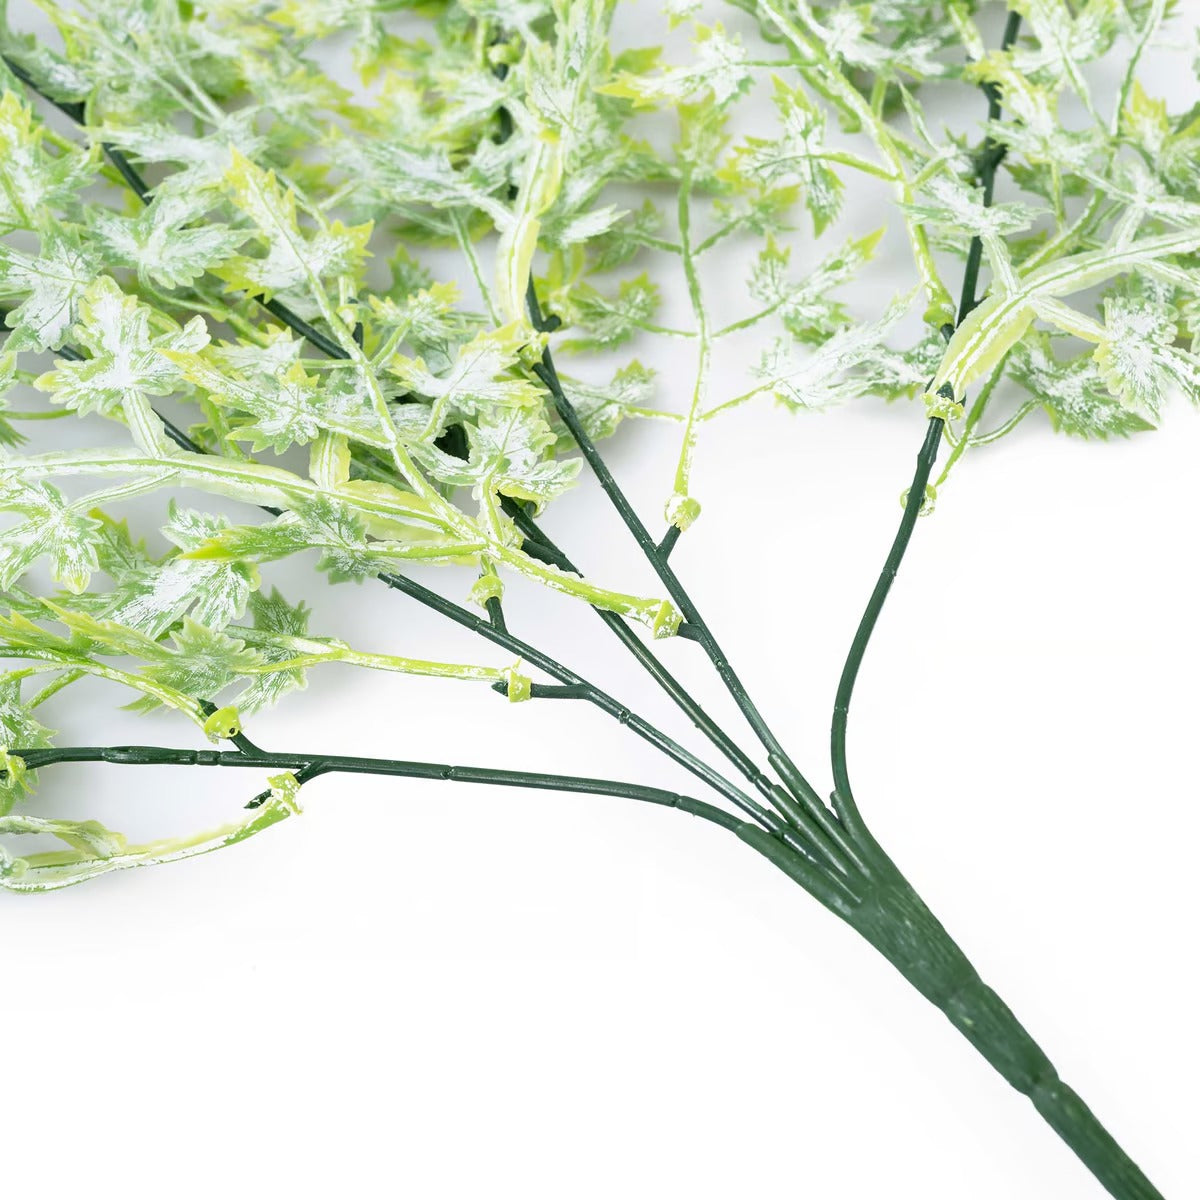 Artificial Hanging Leaf Plant H80cm - Green